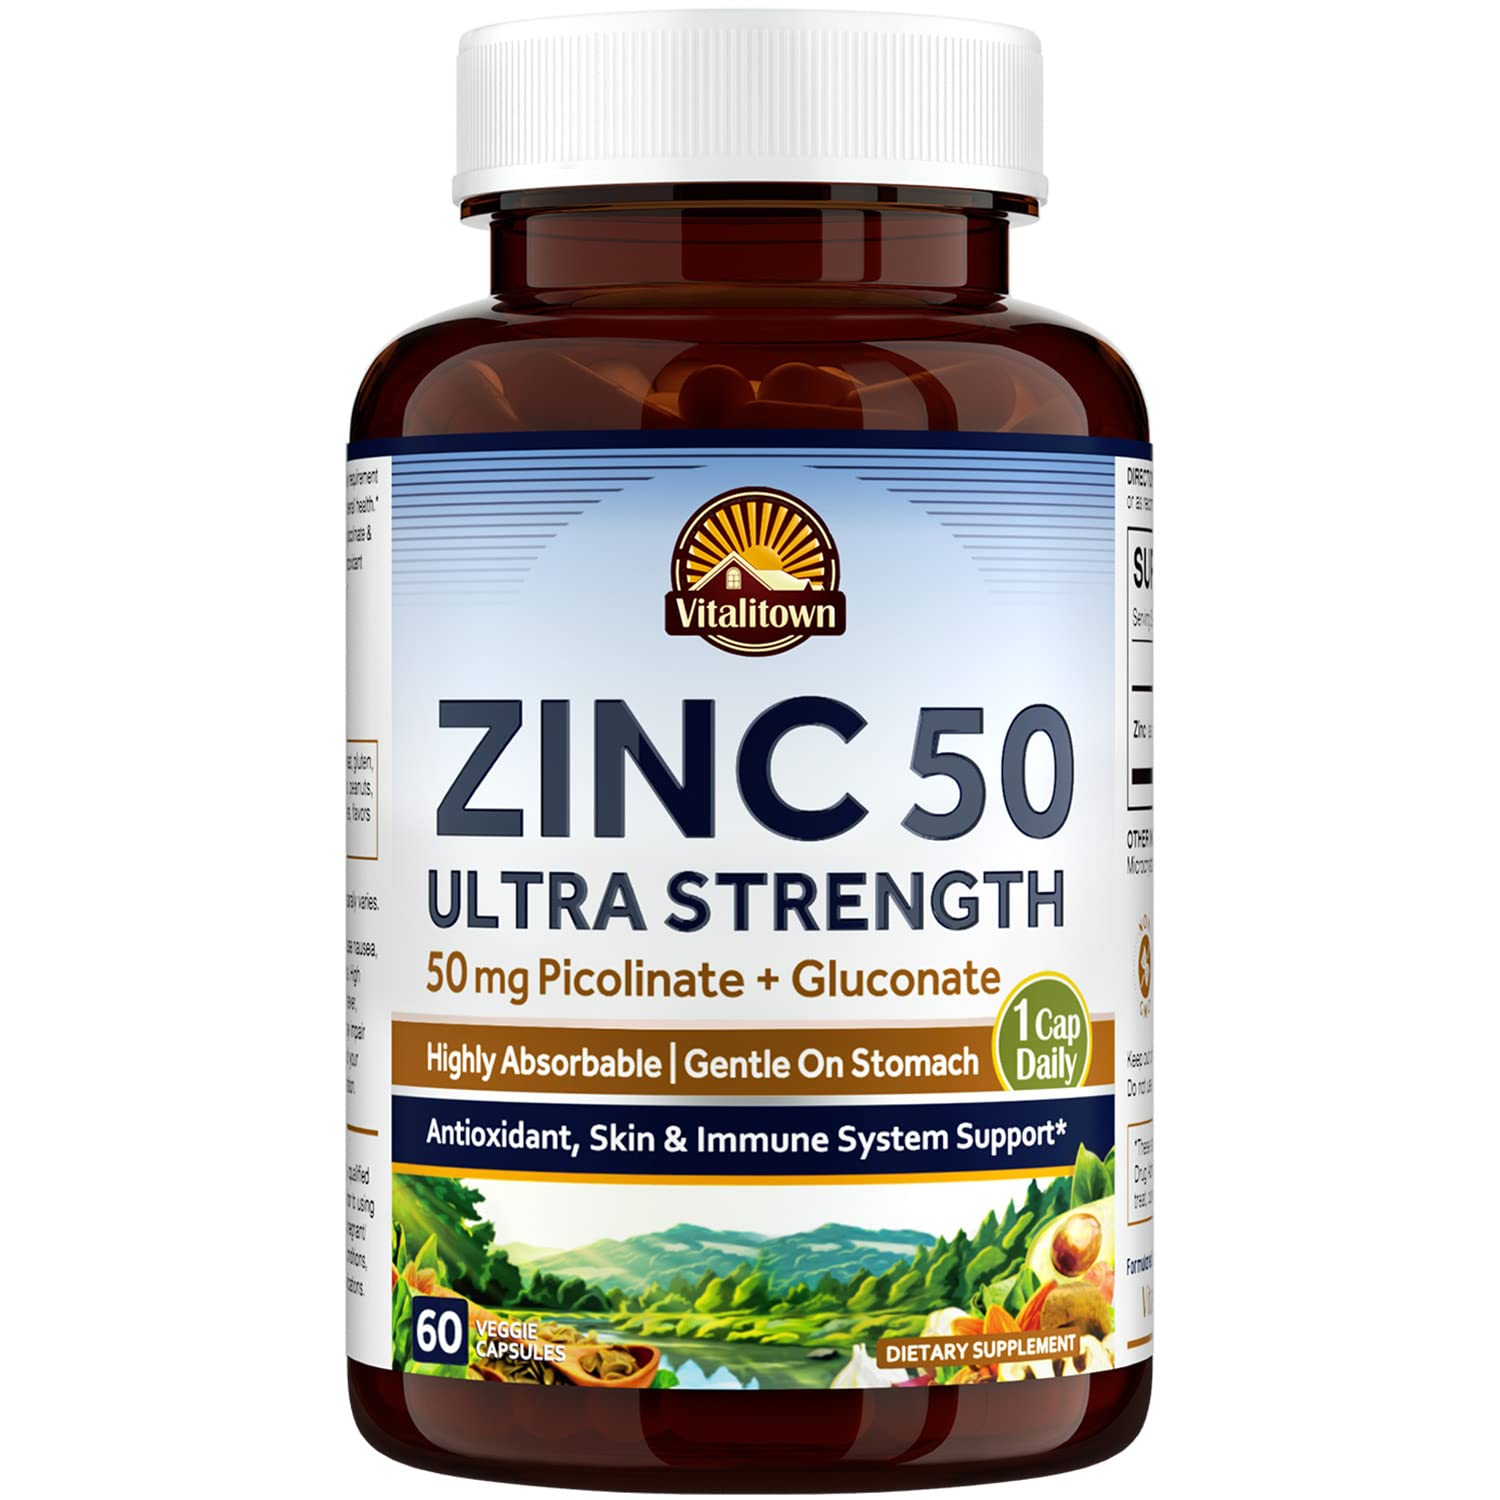 Vitalitown Zinc 50 mg, Zinc Picolinate, Zinc Gluconate, 60 Veggie Capsules, No Zinc Oxide, Well-Absorbed, Chelated Zinc Supplement, Immune System, Healthy Skin & Development, Vegan, NO Gluten, Non-GMO